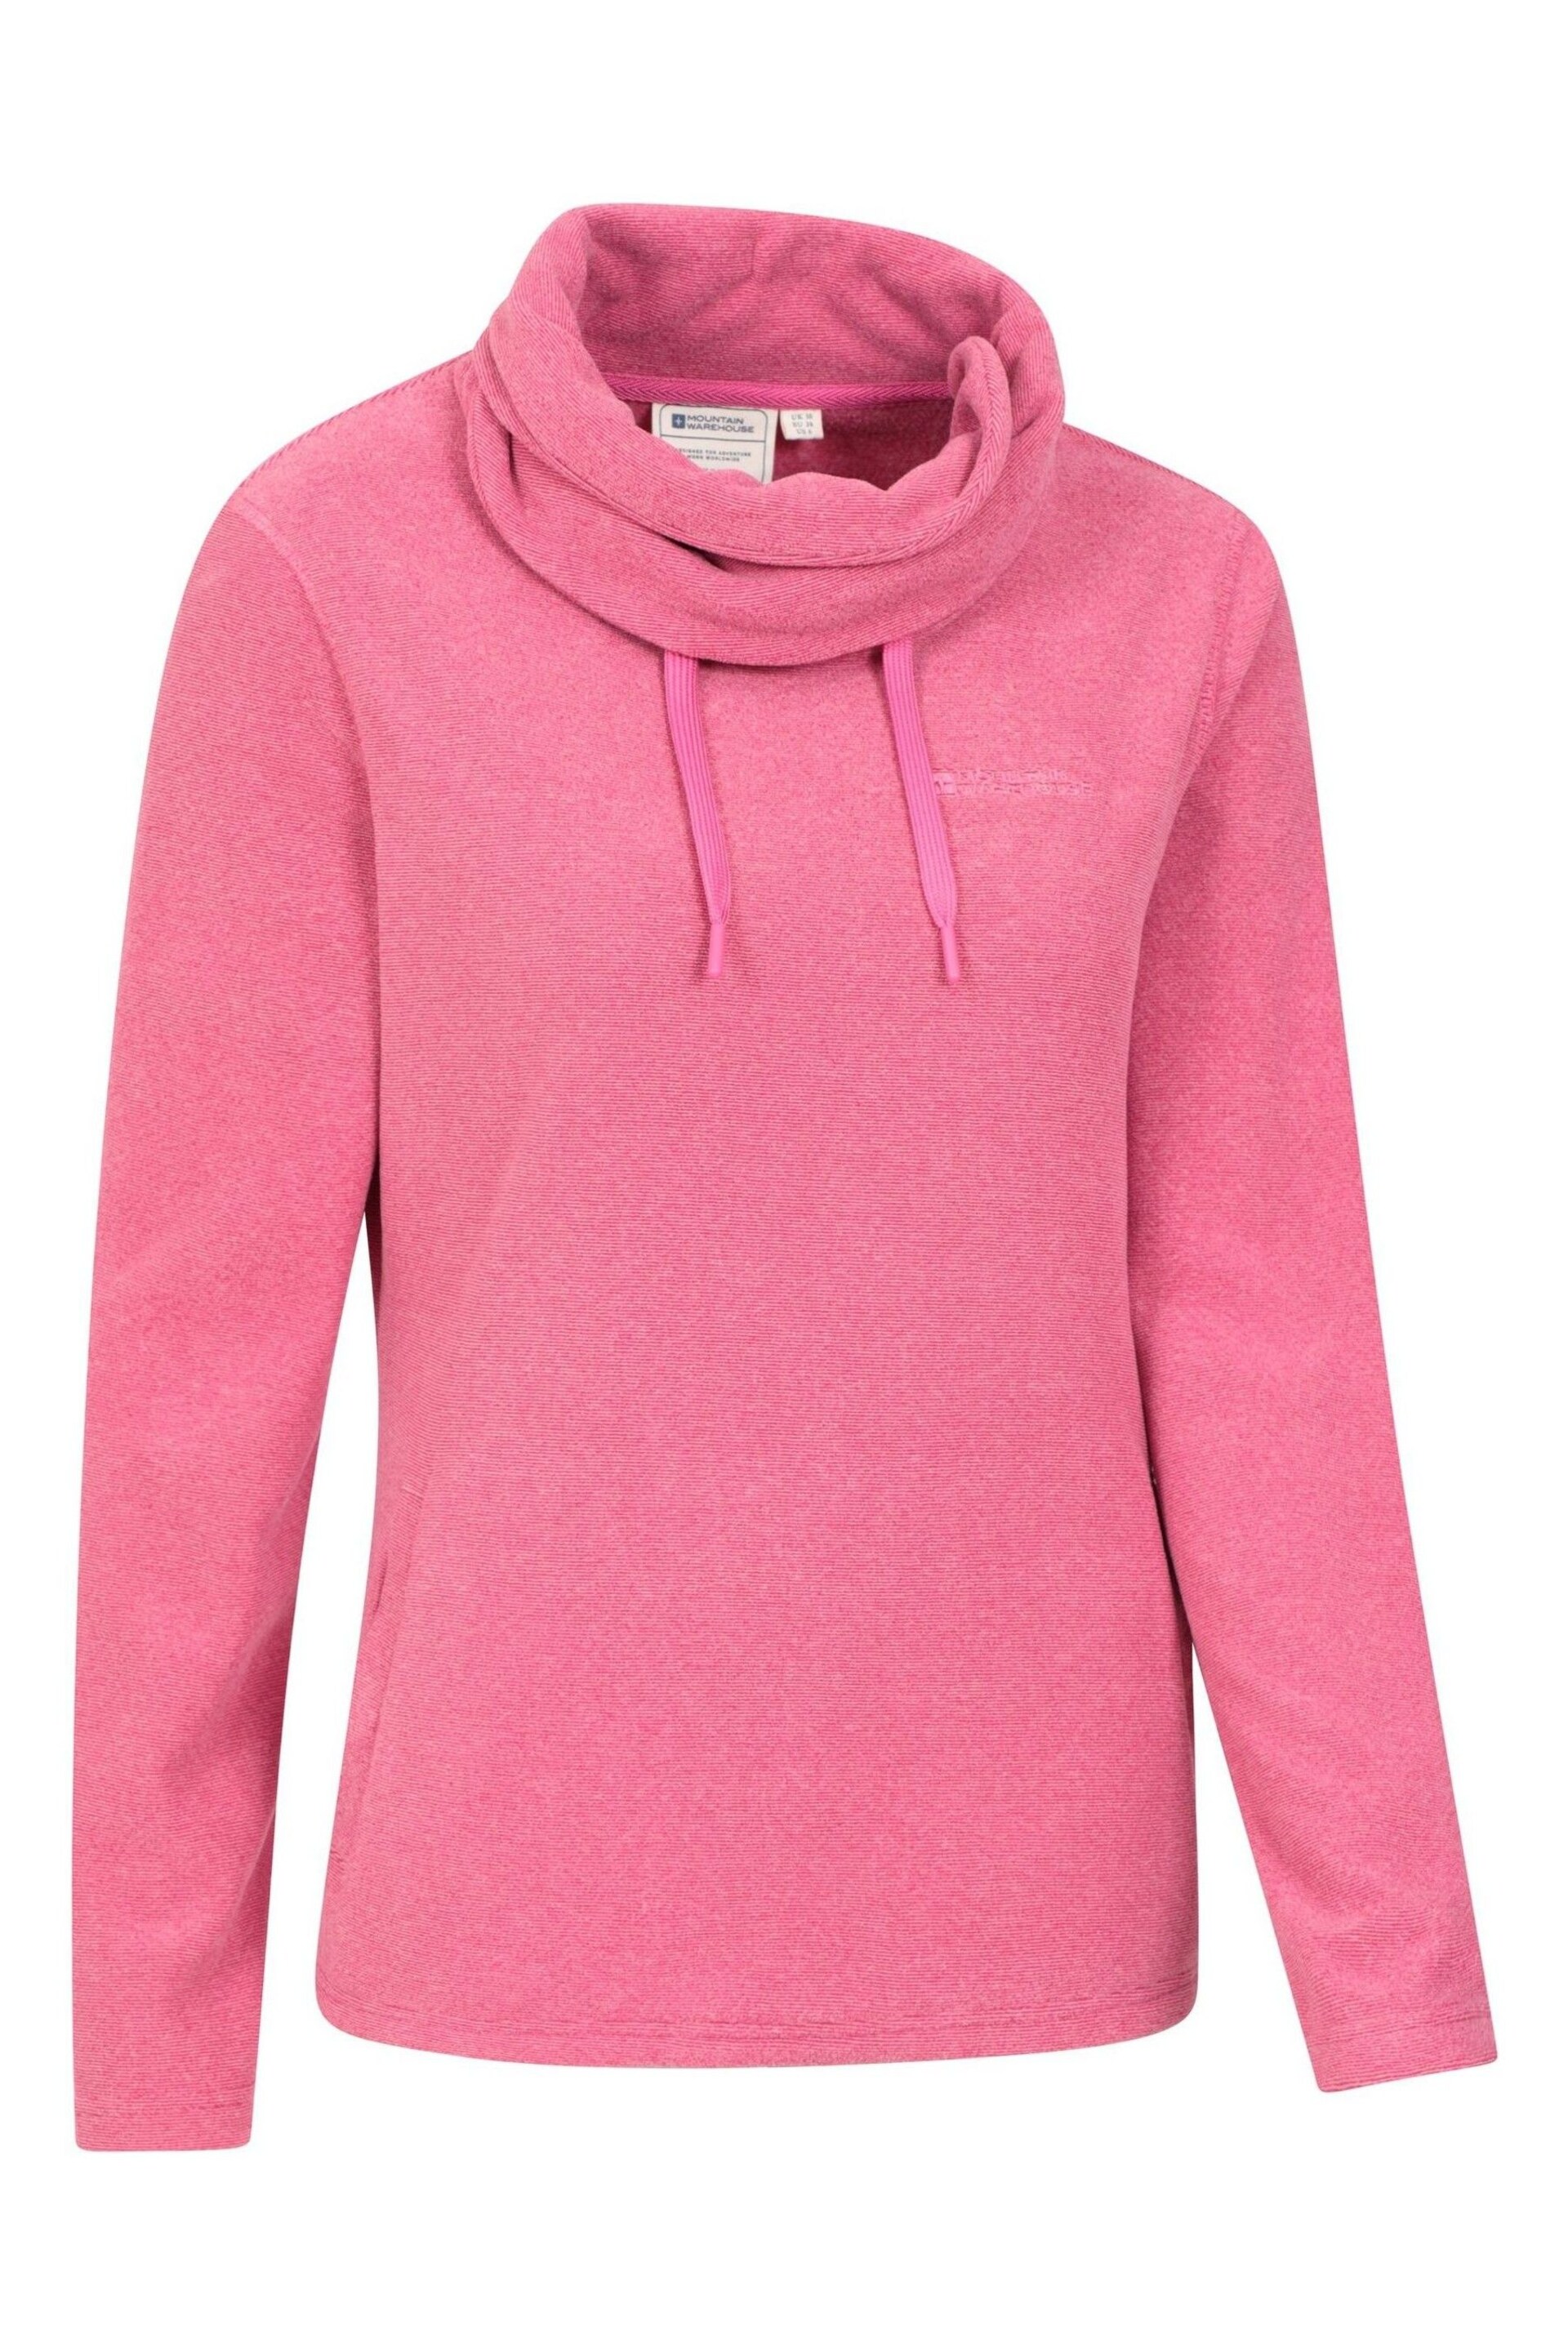 Mountain Warehouse Pink Womens Hebridean Cowl Neck Fleece - Image 4 of 5